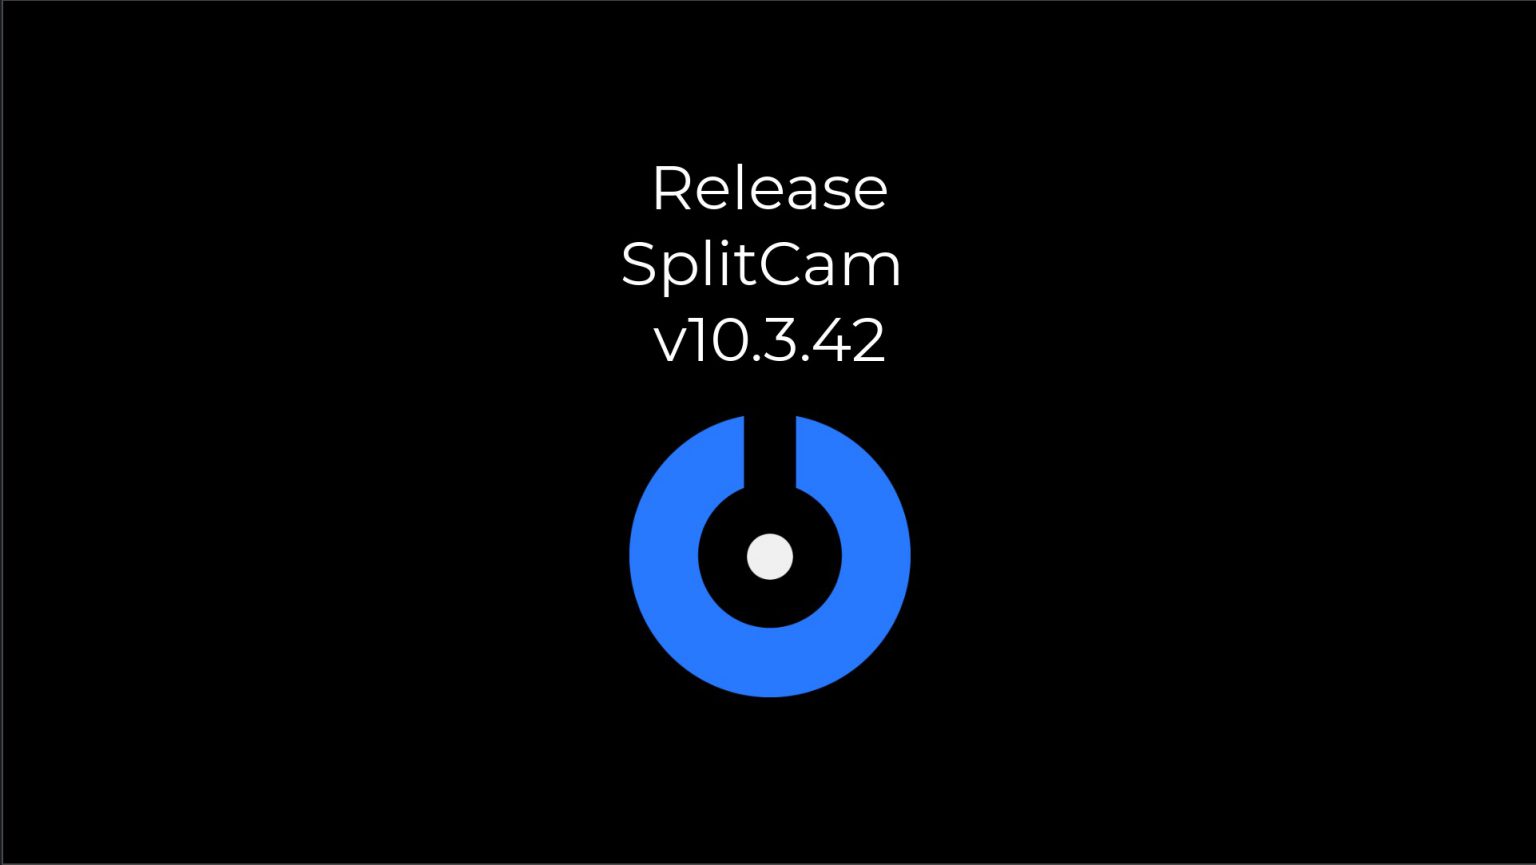 SplitCam 10.7.18 download the last version for windows